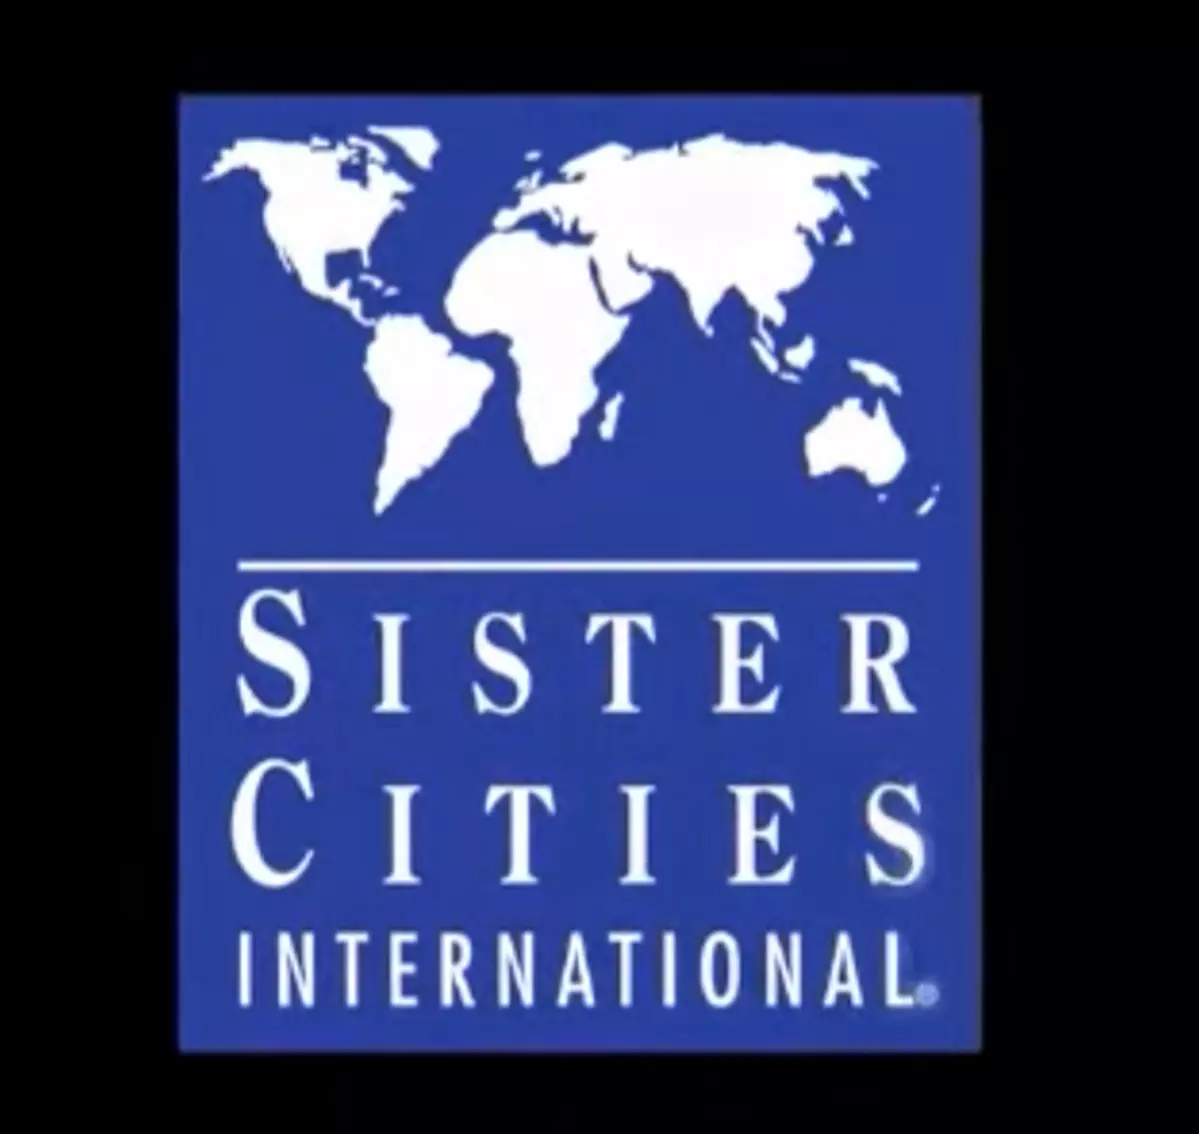 Sister cities. Систер программа.